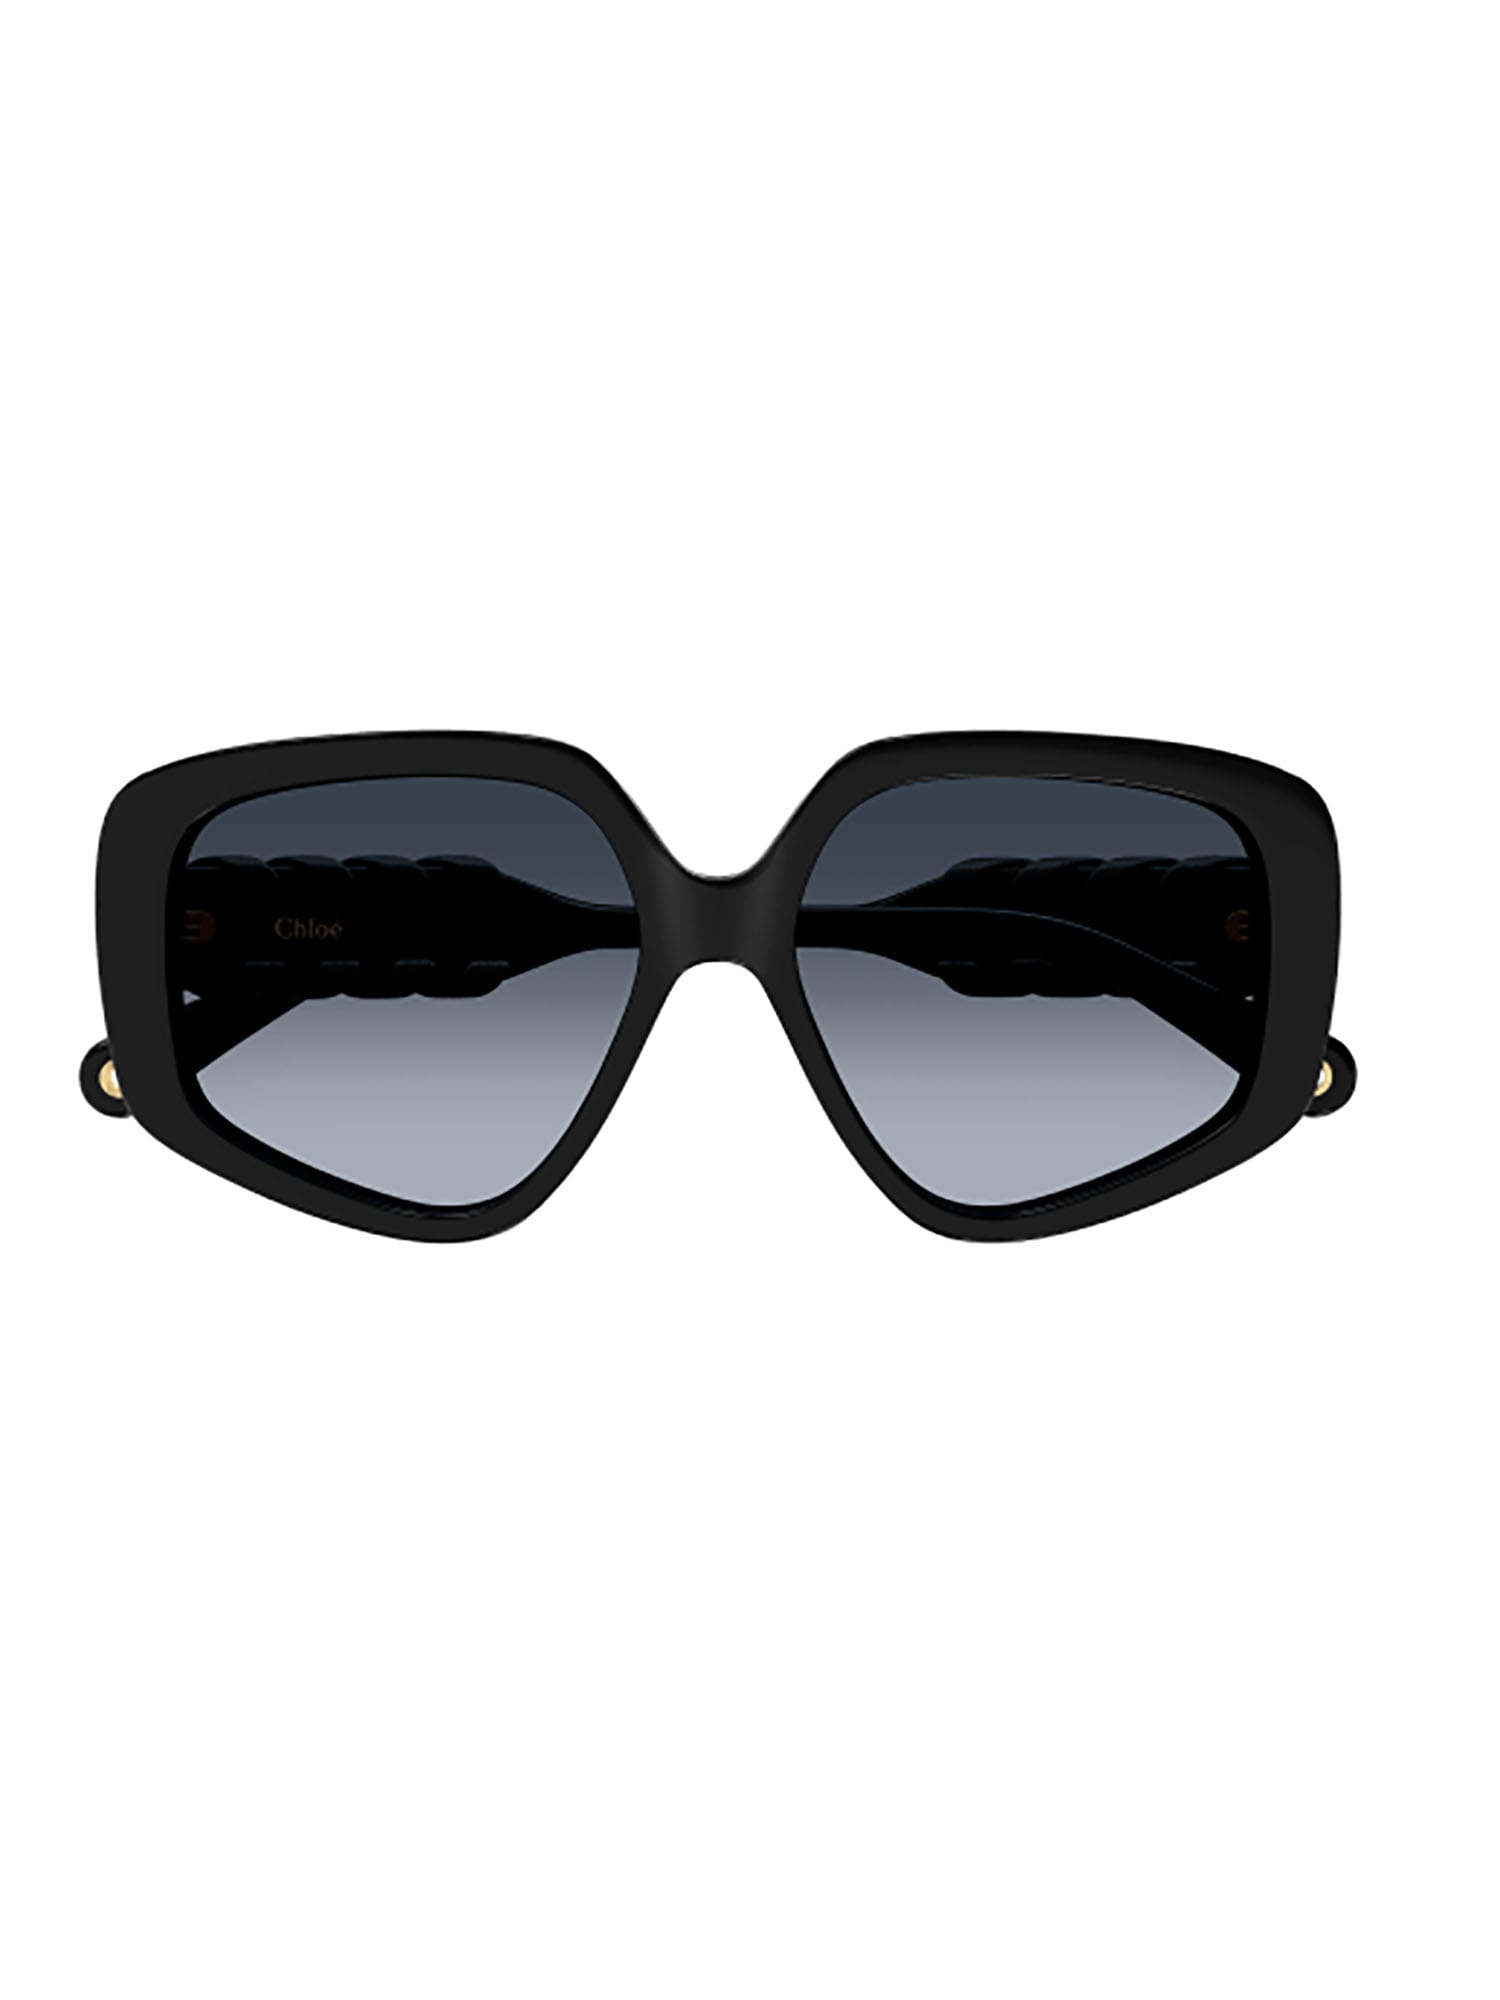 Chloé Ch0210s Sunglasses In Black Black Grey